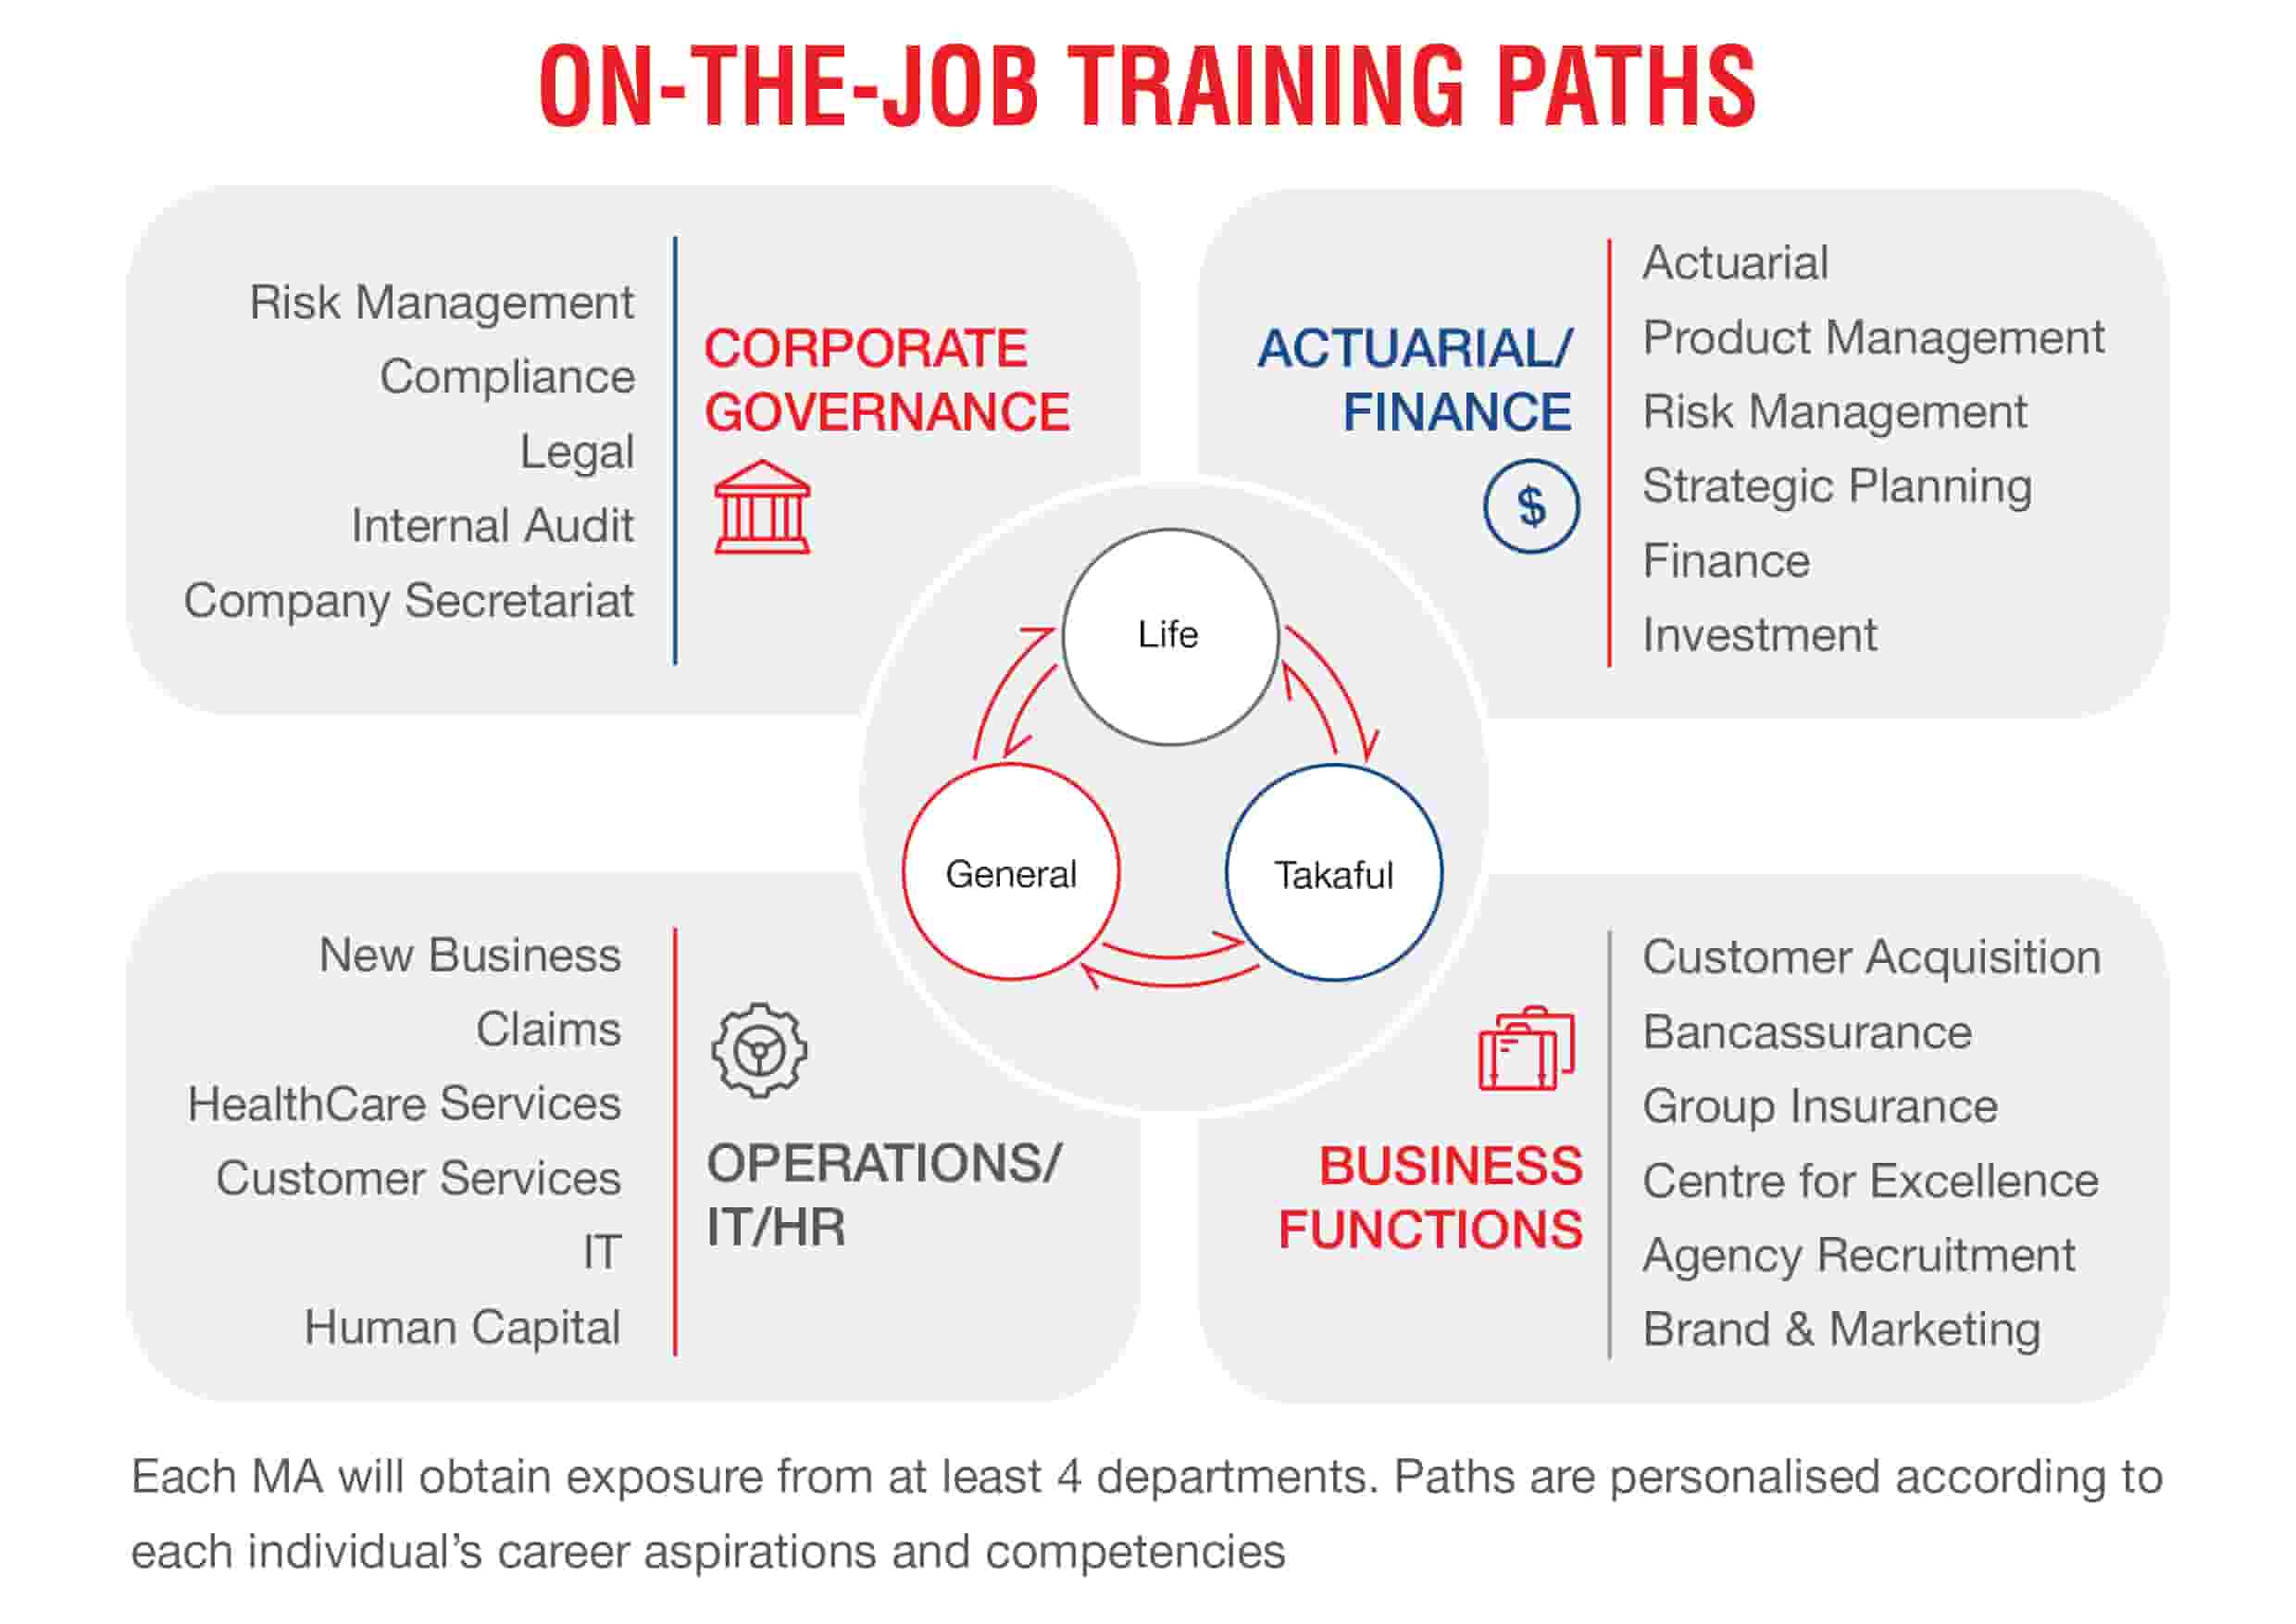 On-The-Job Training Paths